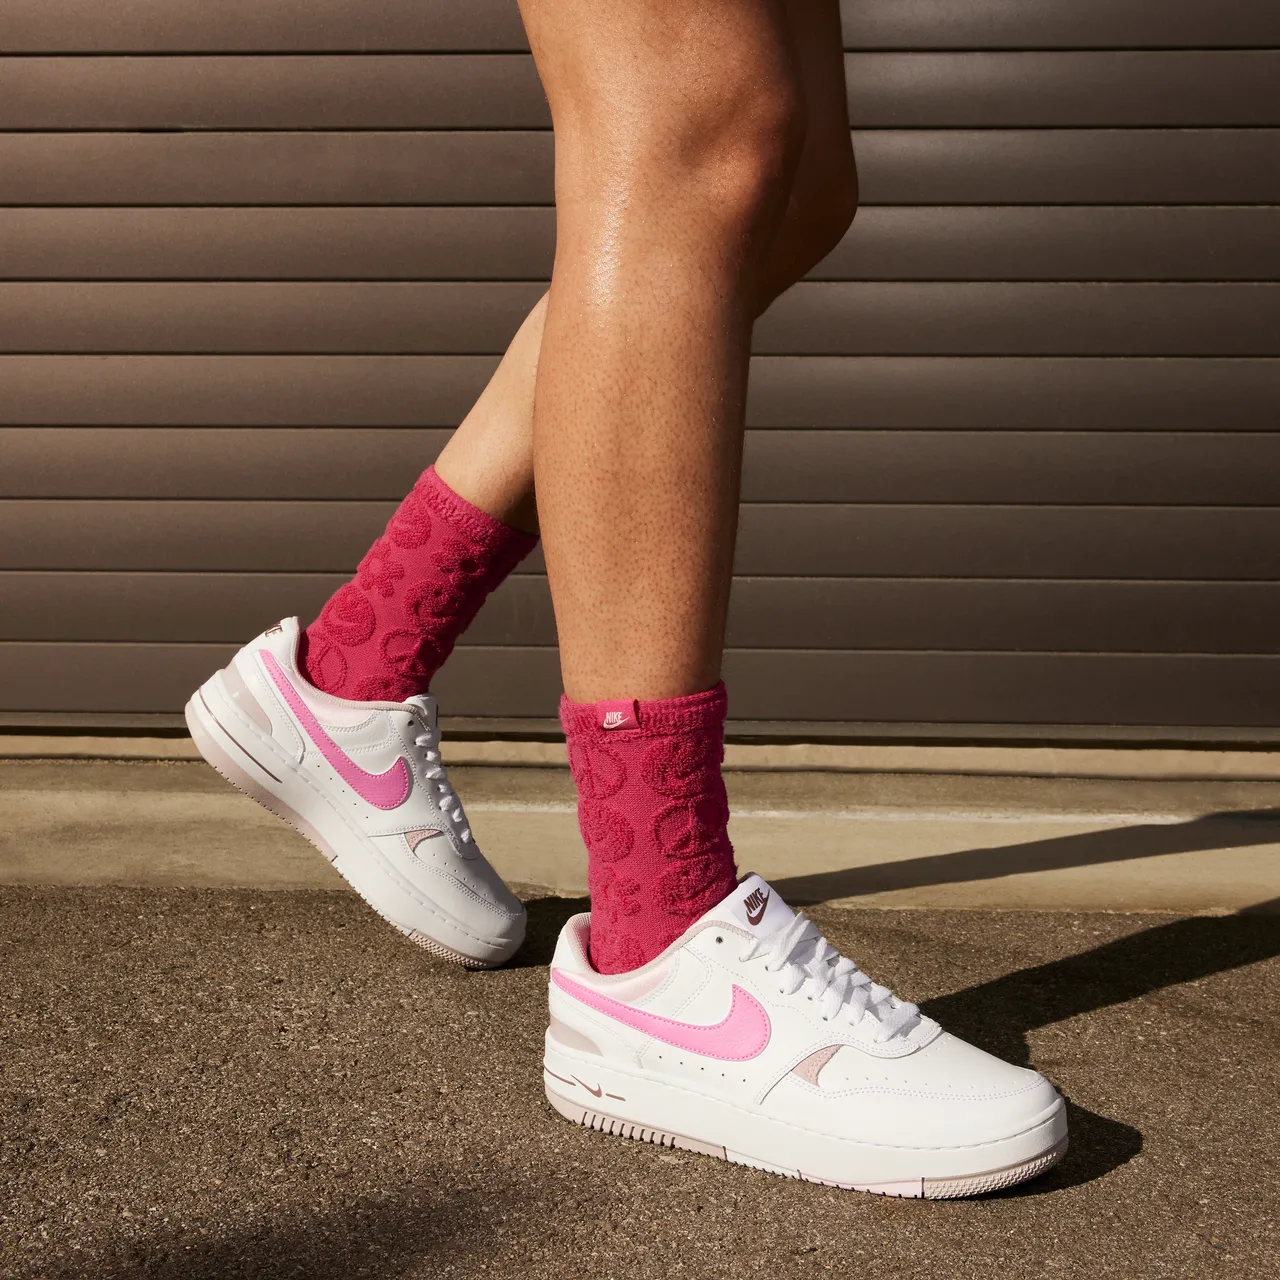 Nike Gamma Force Women's Shoes - White